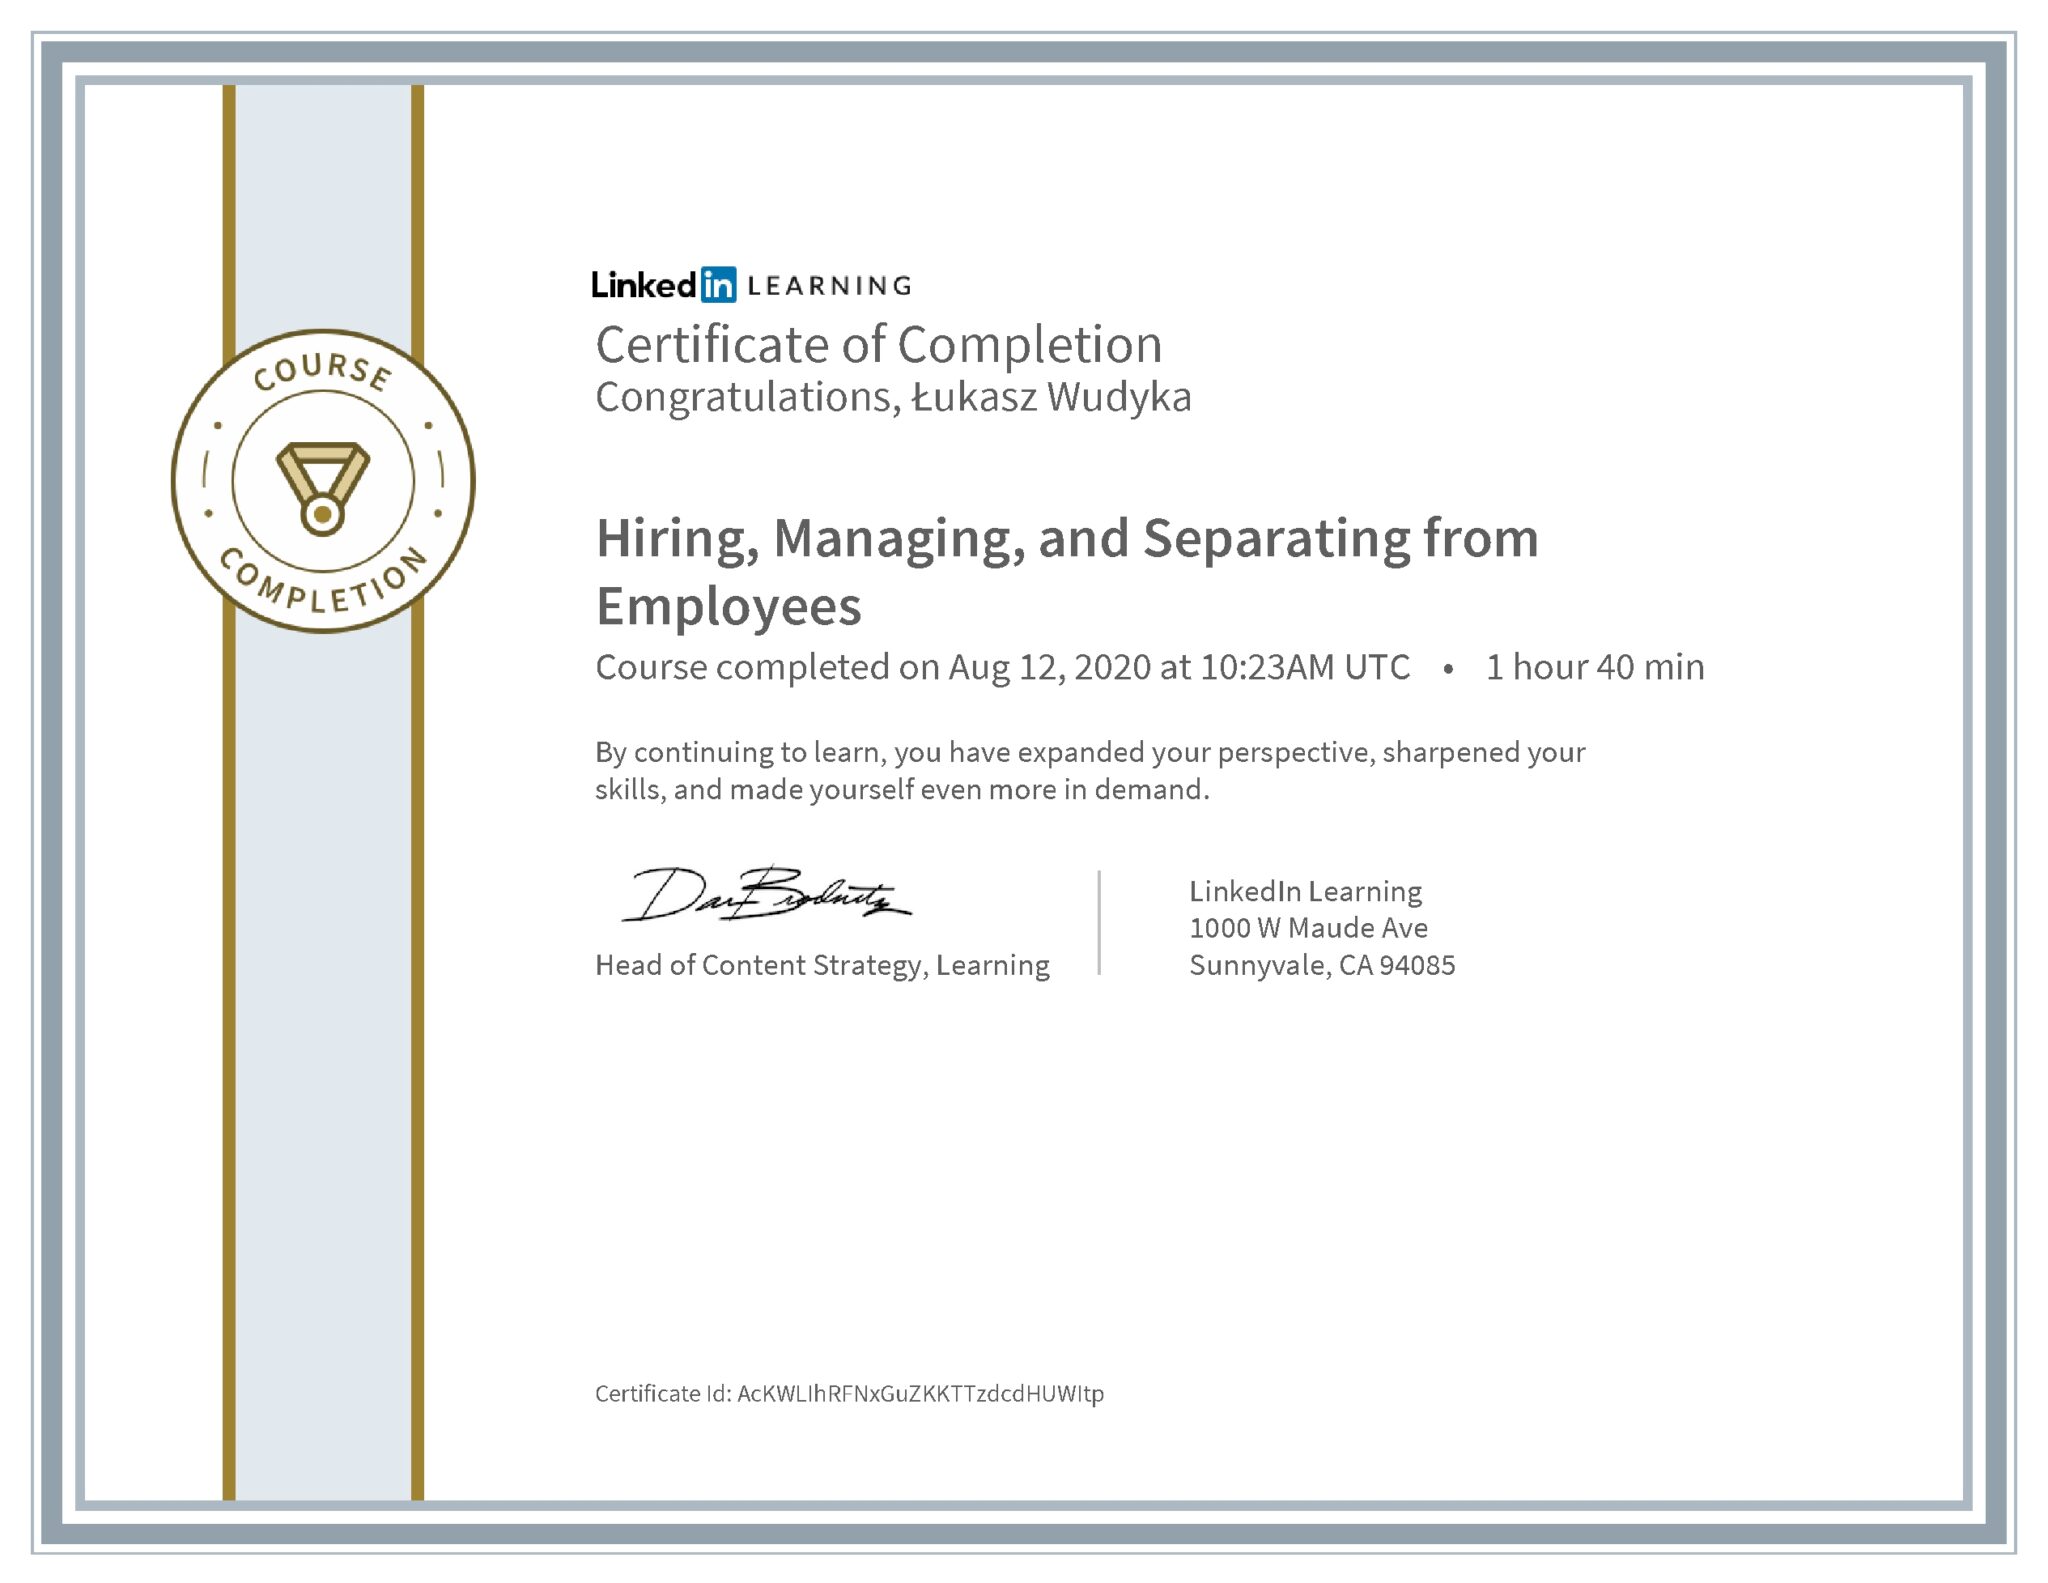 Łukasz Wudyka certyfikat LinkedIn Hiring, Managing, and Separating from Employees